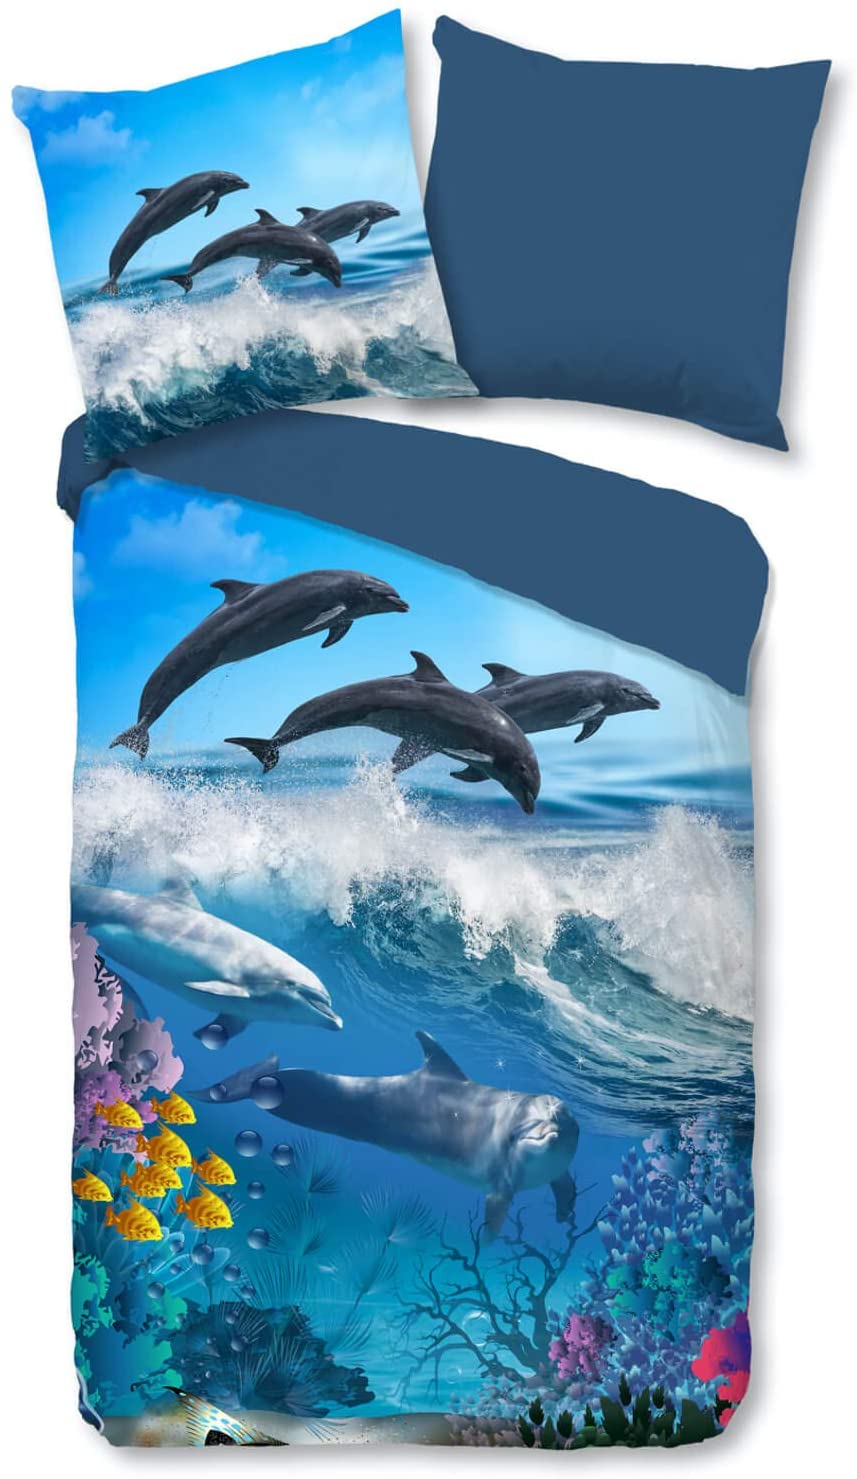 Espico Trendy Bedding Dolphins Animal Motif Underwater World Ocean Fish Sea